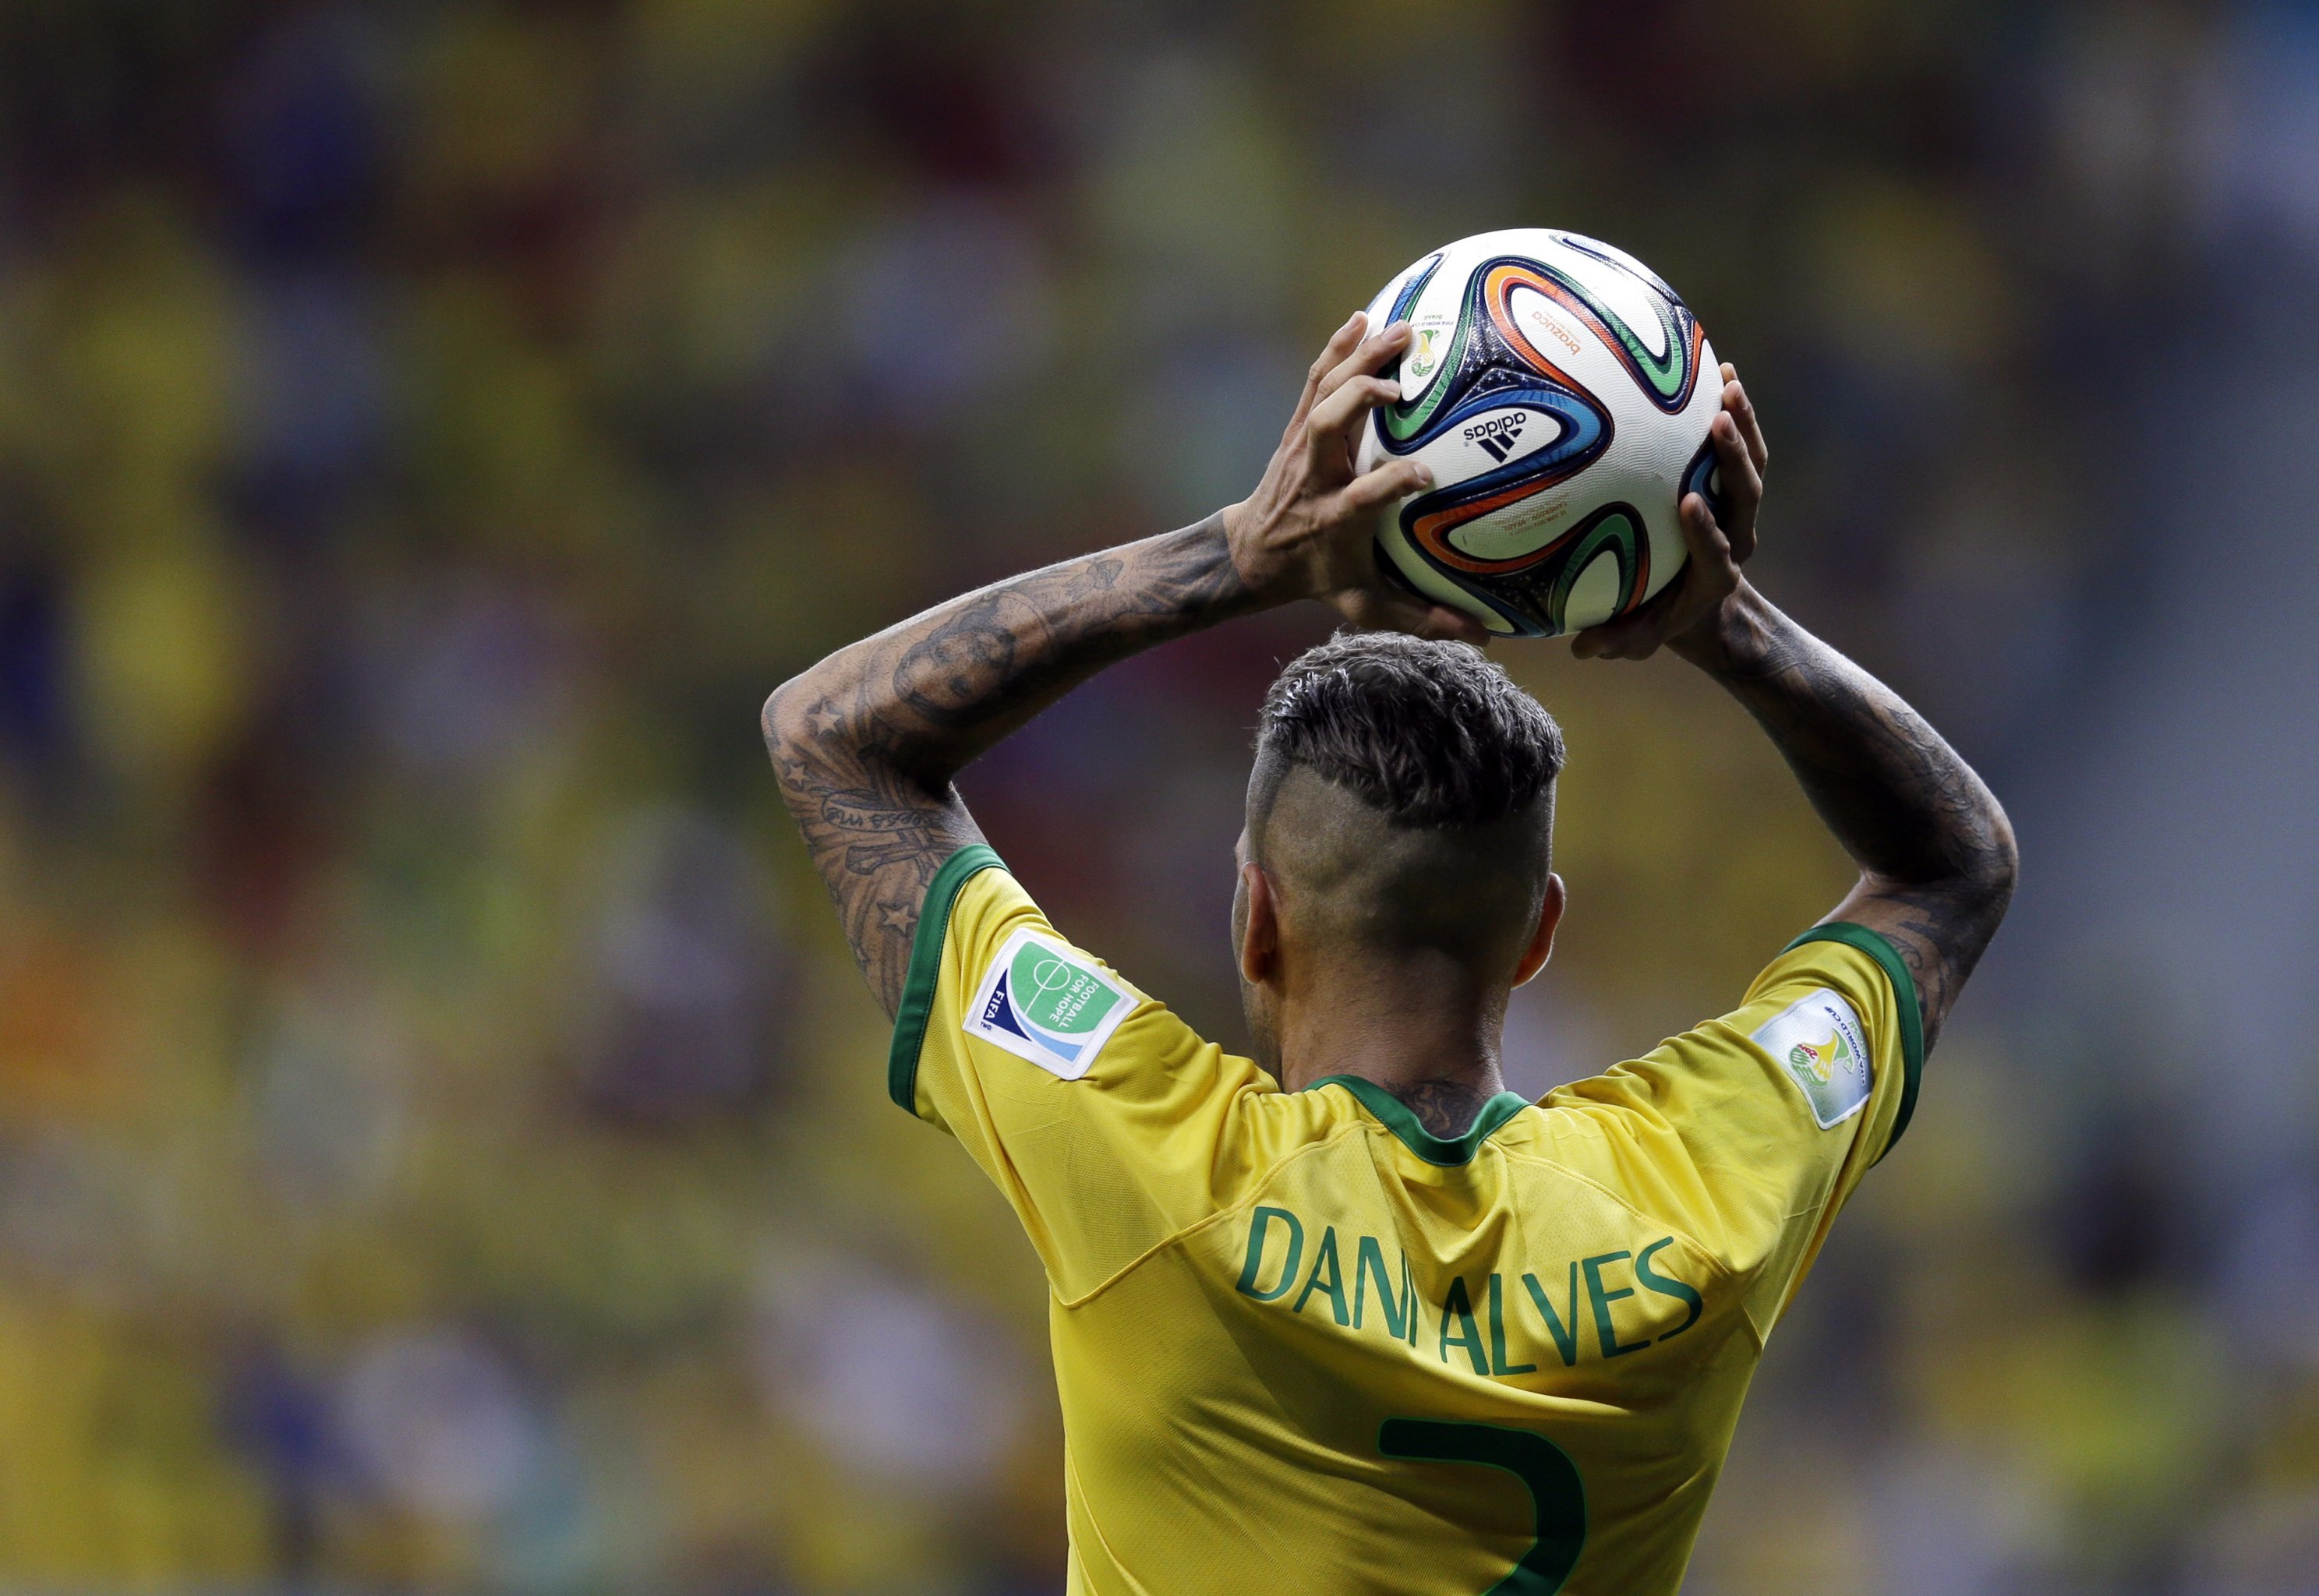 Dunga: Brazil can do better but winning is what matters